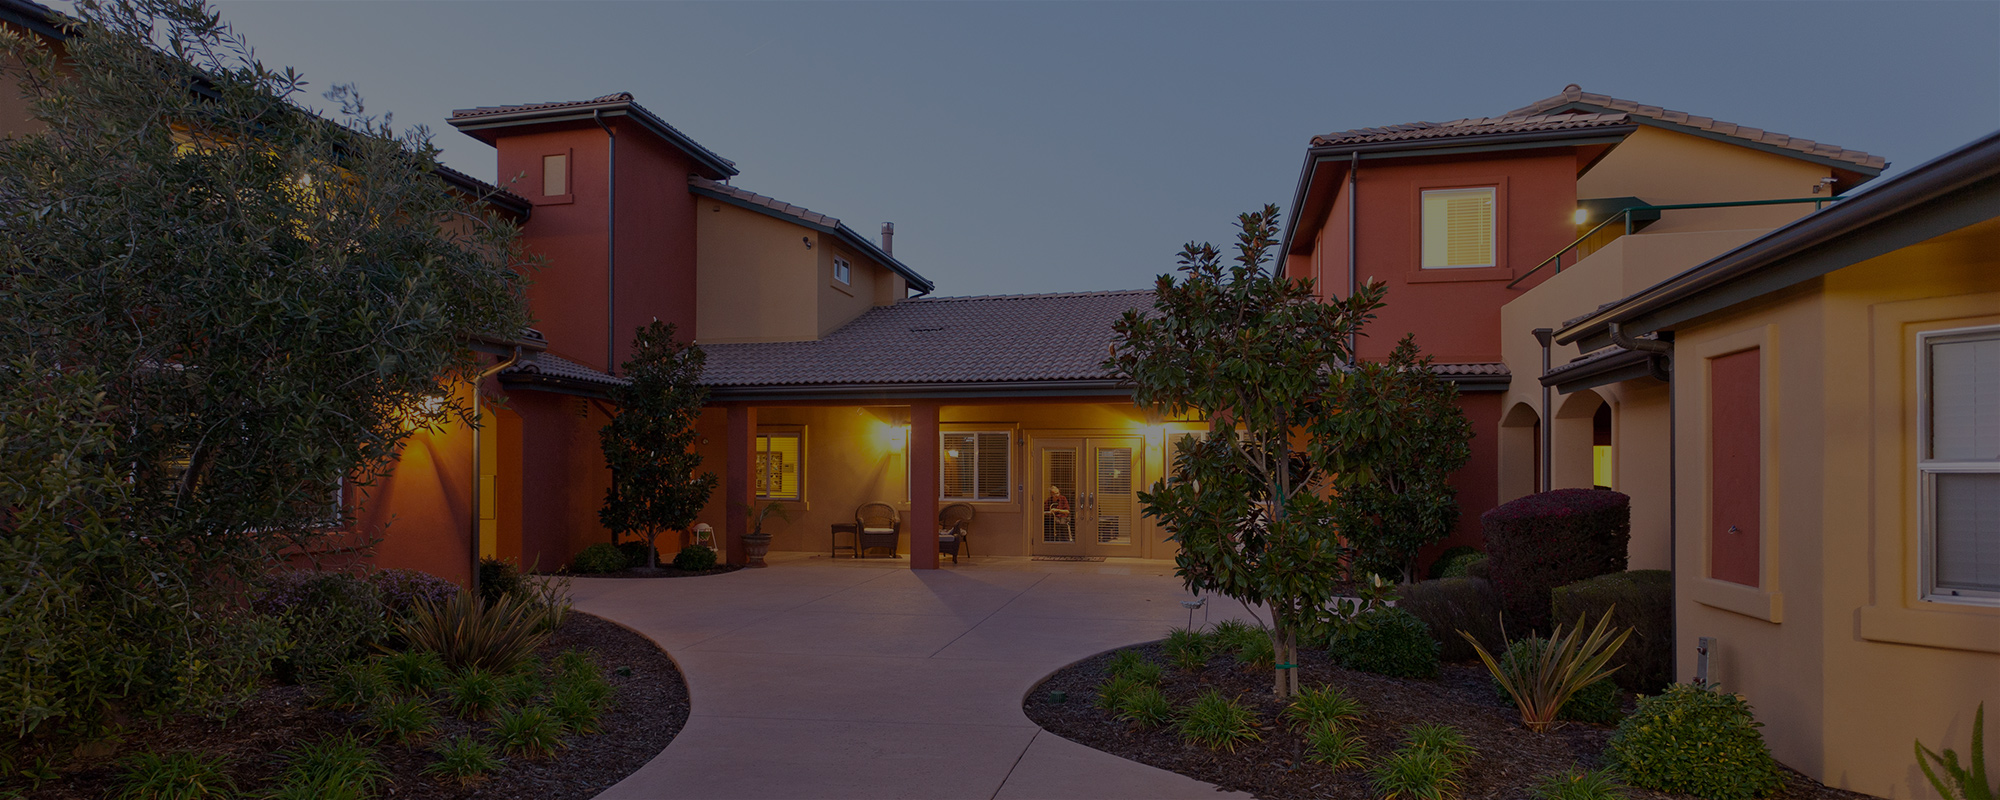 Casa Rosa - San Luis Obispo Arroyo Grande Asssited Living Residence - Alzhimer Care - Memory Care - Elder Care - Casa Rosa Elder Care